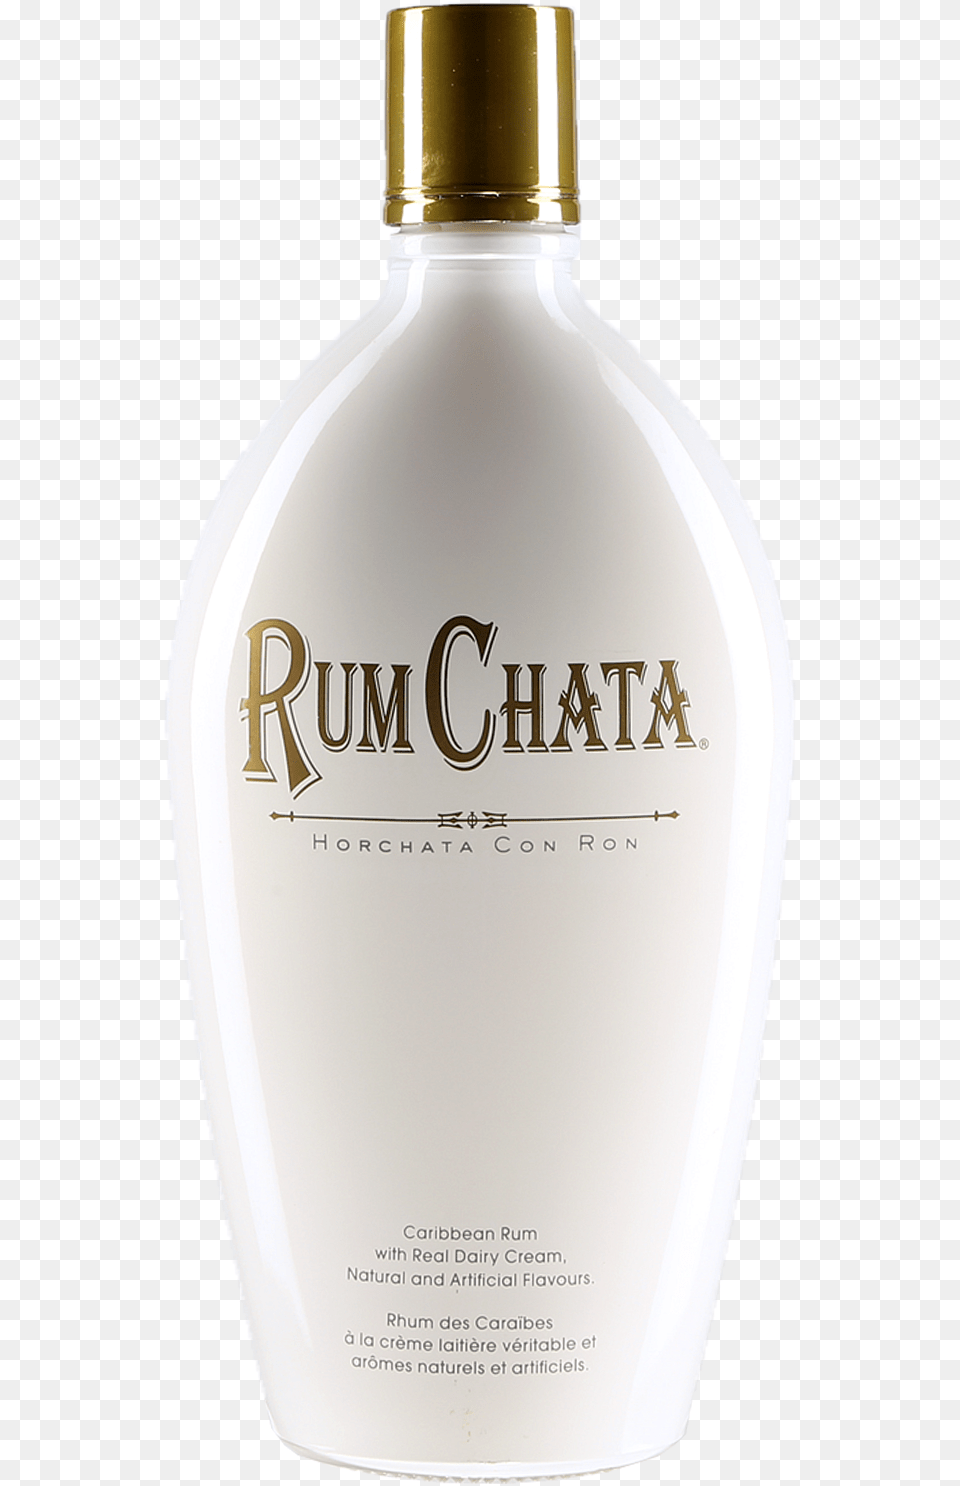 Rumchata Glass Bottle, Lotion, Cosmetics, Perfume Png Image